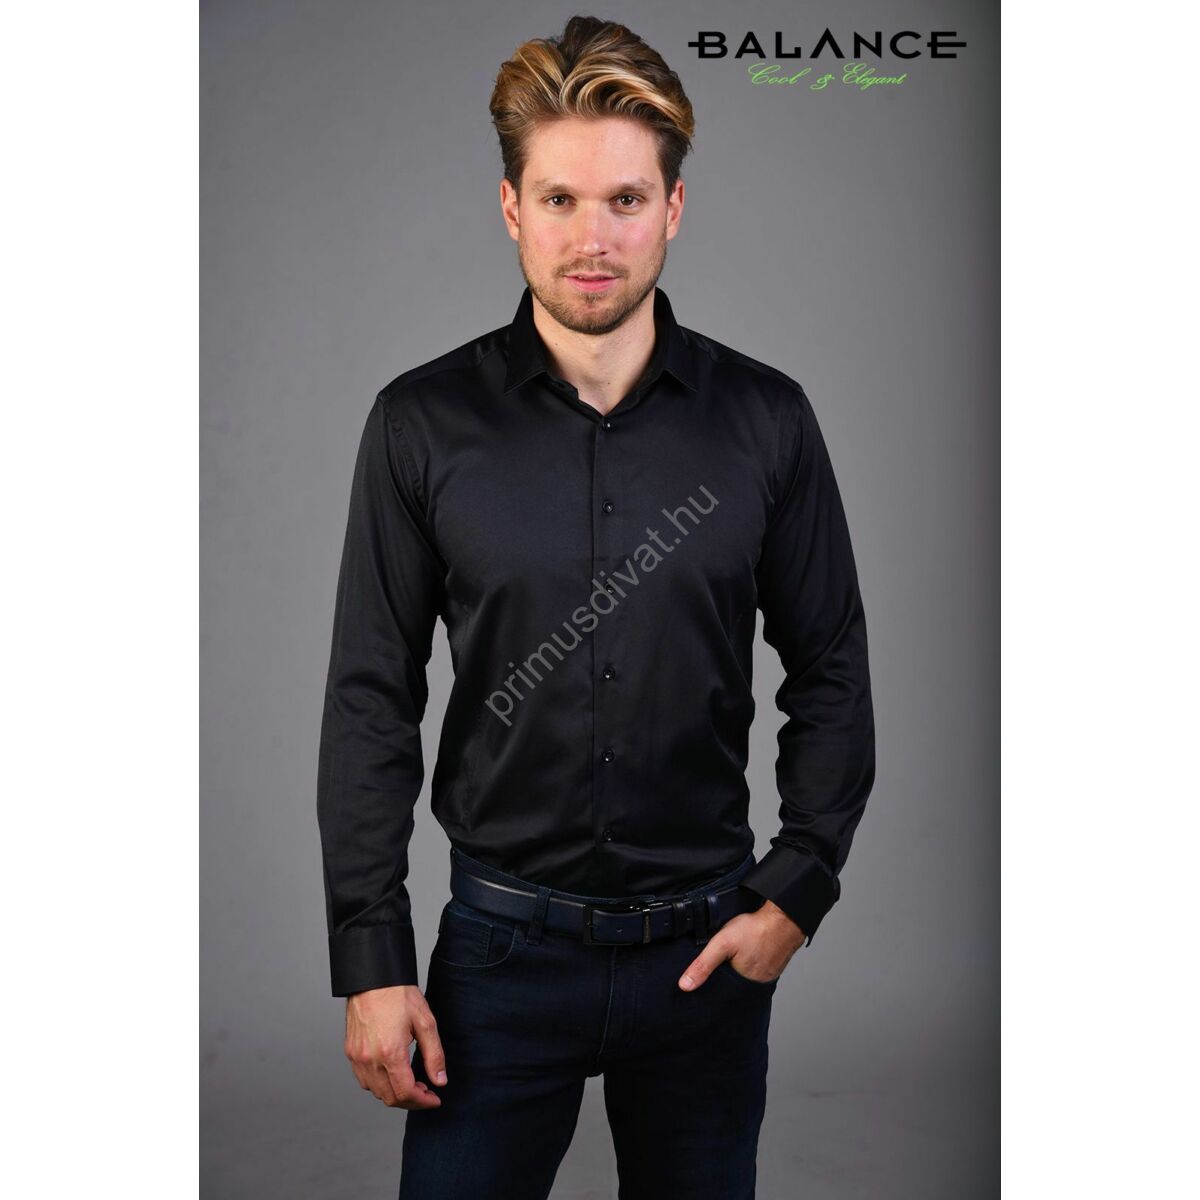 Balance normál galléros, fekete rugalmas pamutszatén, slim-fit hosszú ujjú alkalmi ing